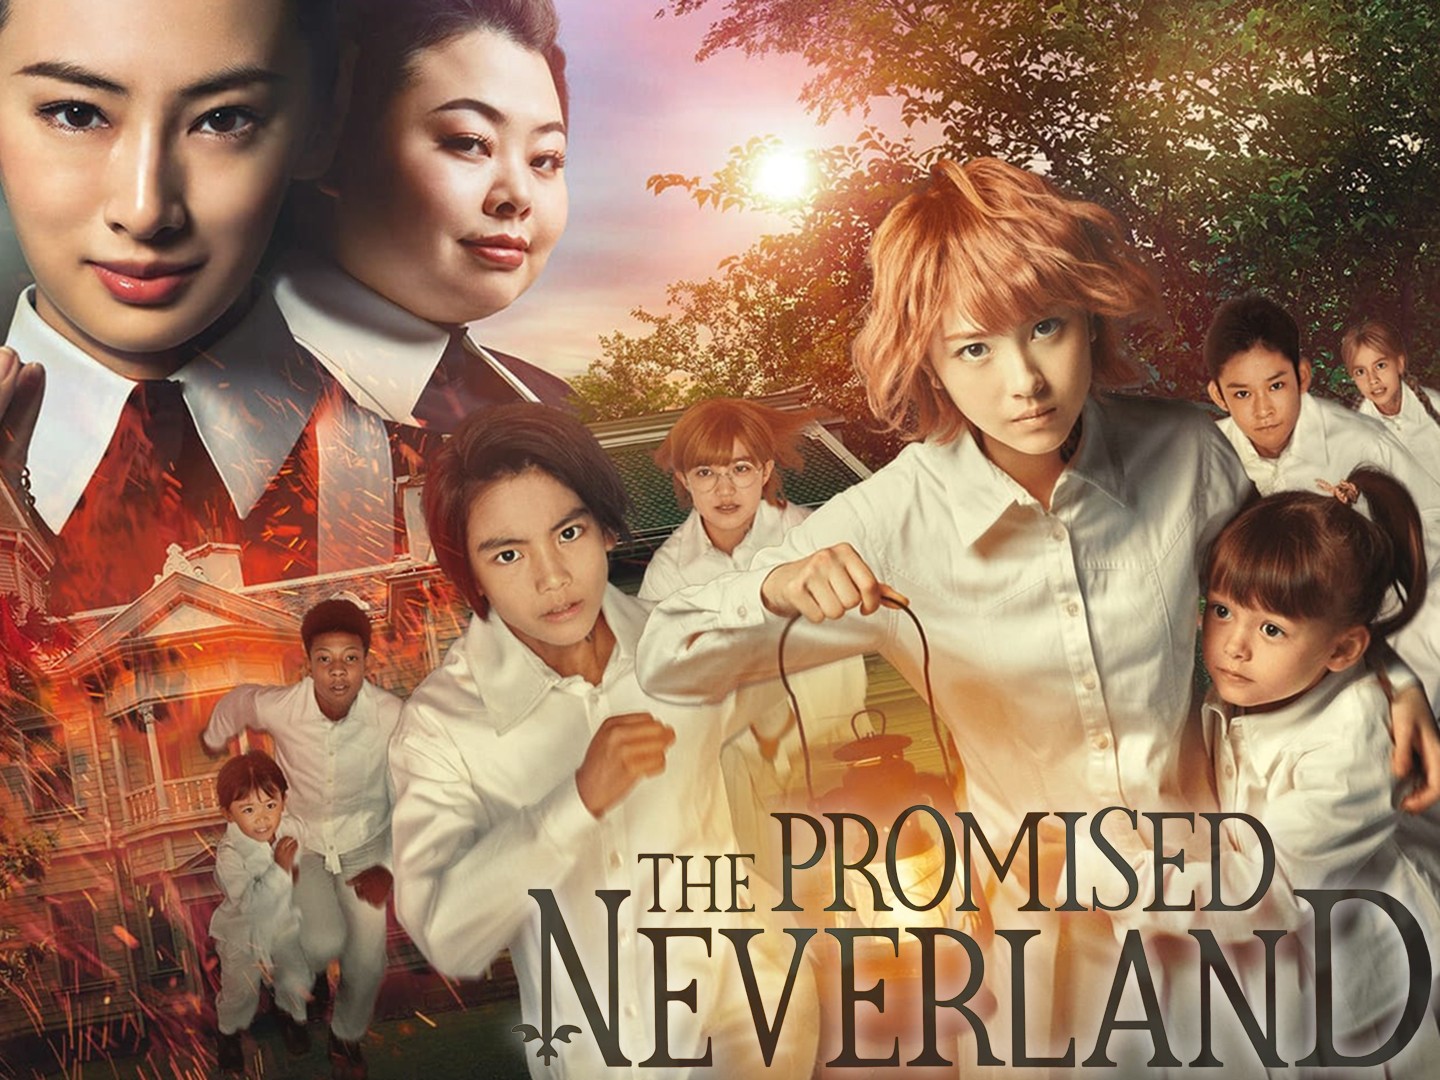 Anime] Full Trailer for Live-Action “The Promised Neverland” Film